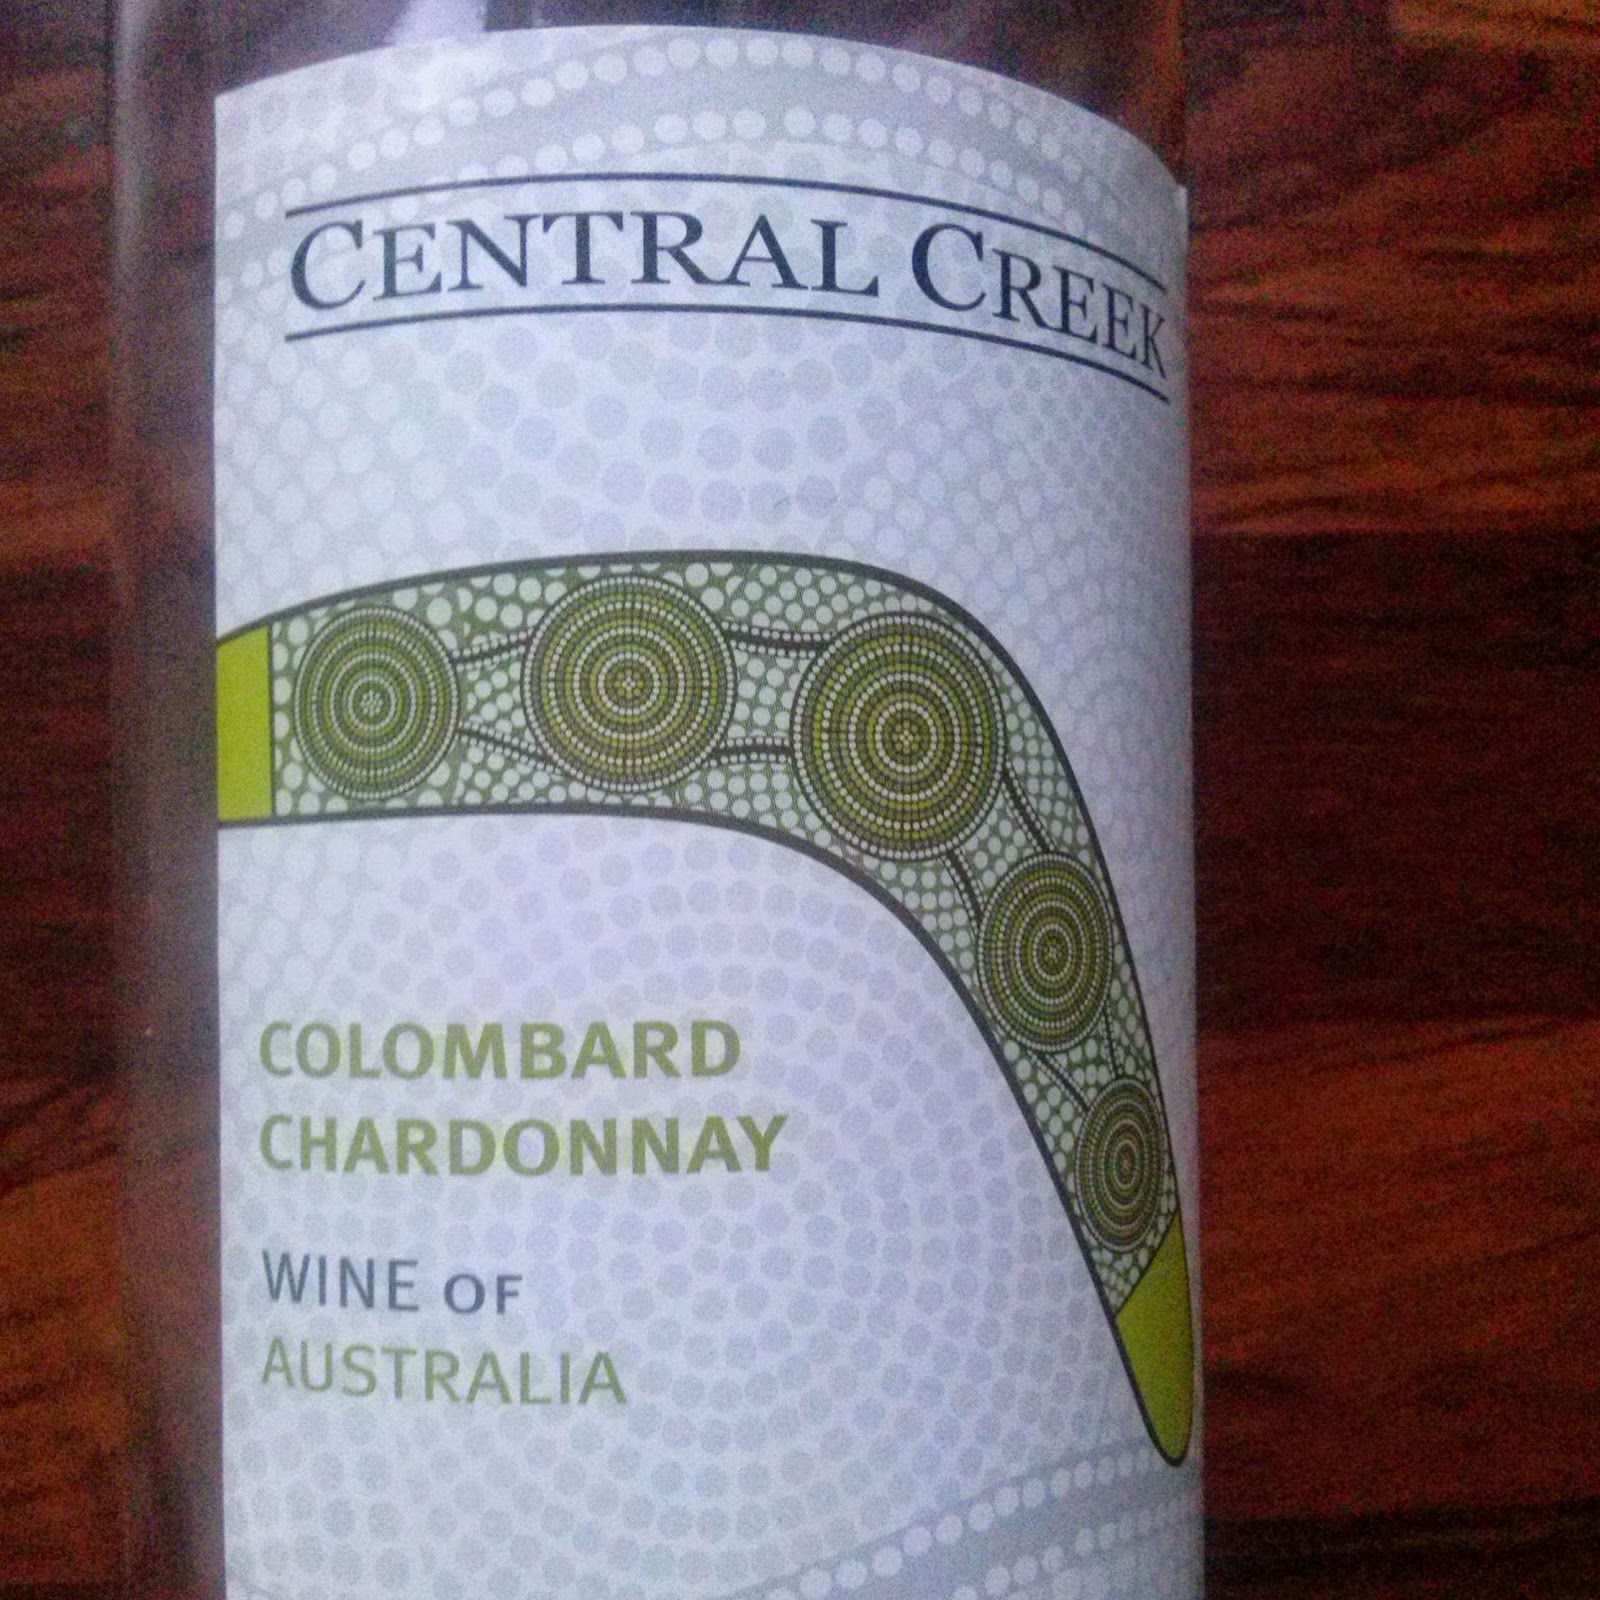 Central Creek Colombard Chardonnay